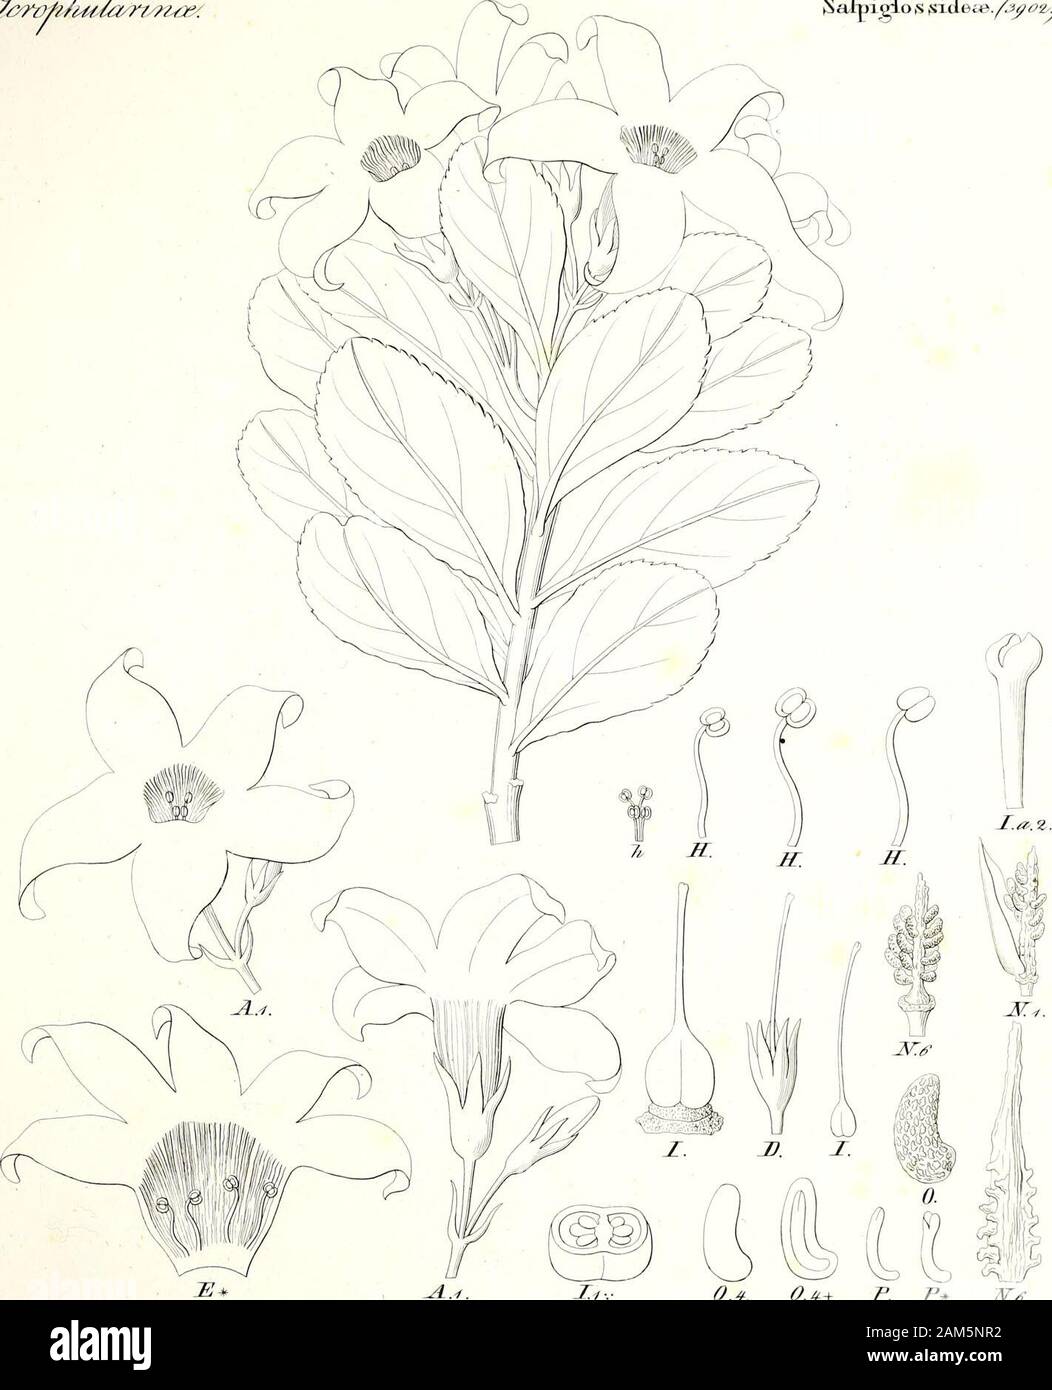 Iconographia generum Plantarum. c/# y /&lt;y&? vfi/i 4 t./a, Salpigio, s jssiEeae./^^ 2. &Lt;yturfm - # £ & rvij/FC//dr&z/J/L/. ^ & 9* & fr^/P {Z4 * t * s? £&/?-Ich? . $ $ affime croplrularmei; s Stockfoto